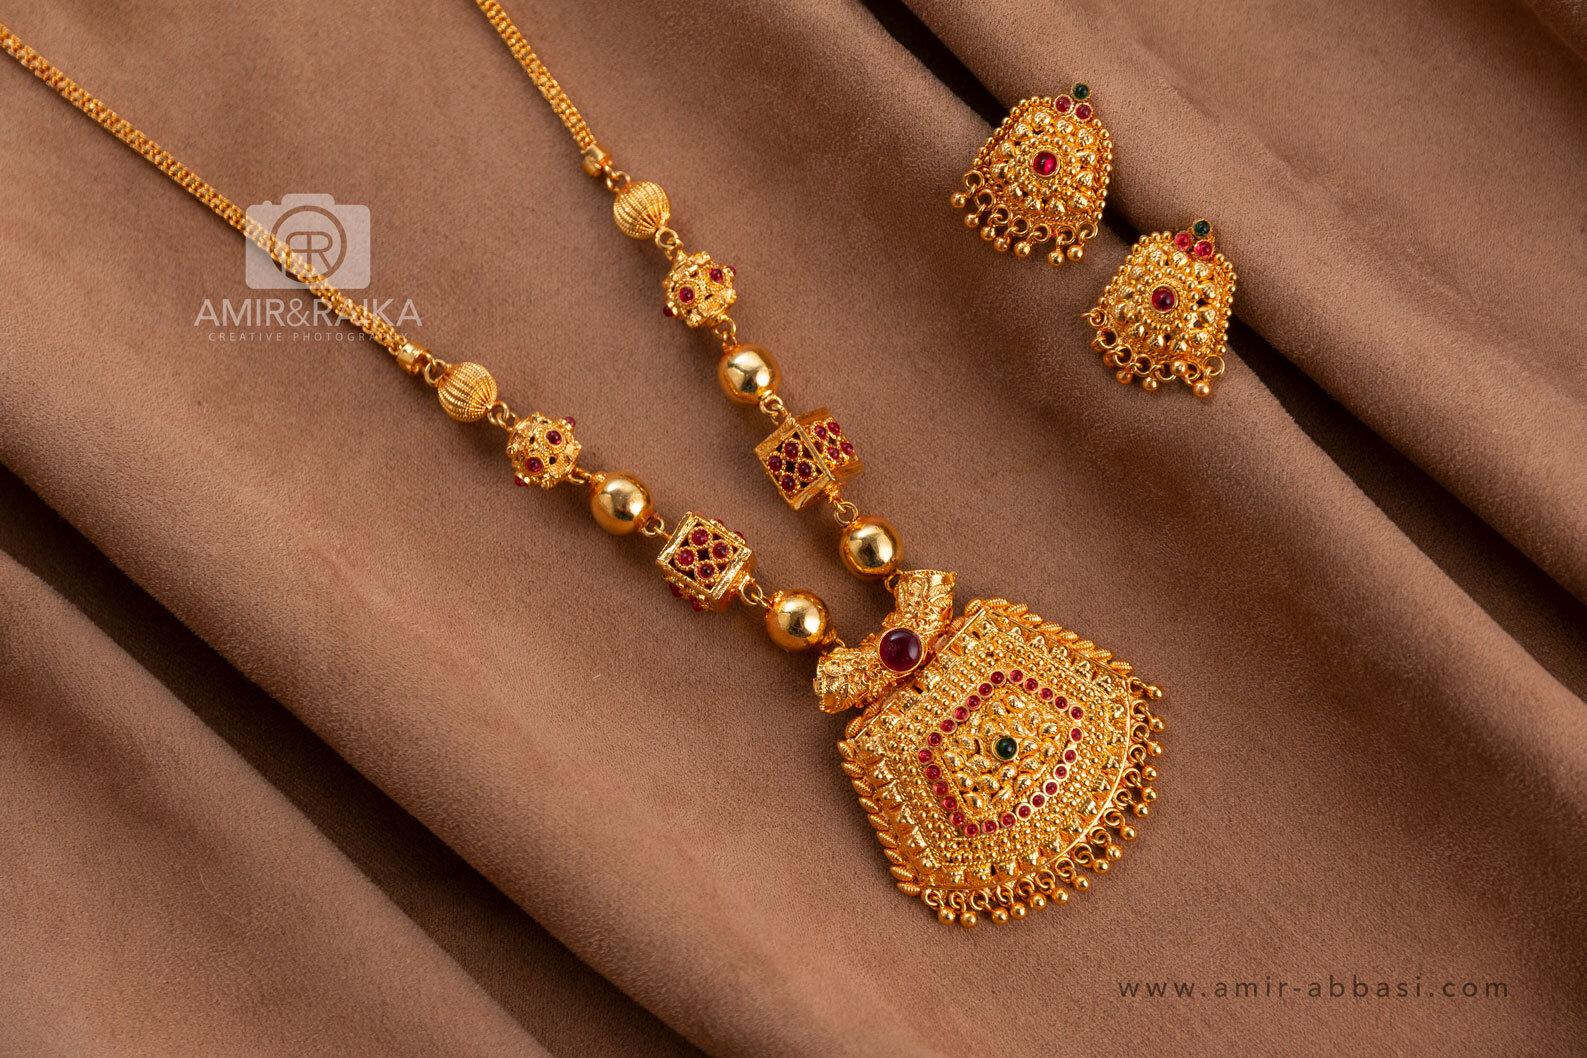 Gold Jewellery Photography in Mumbai